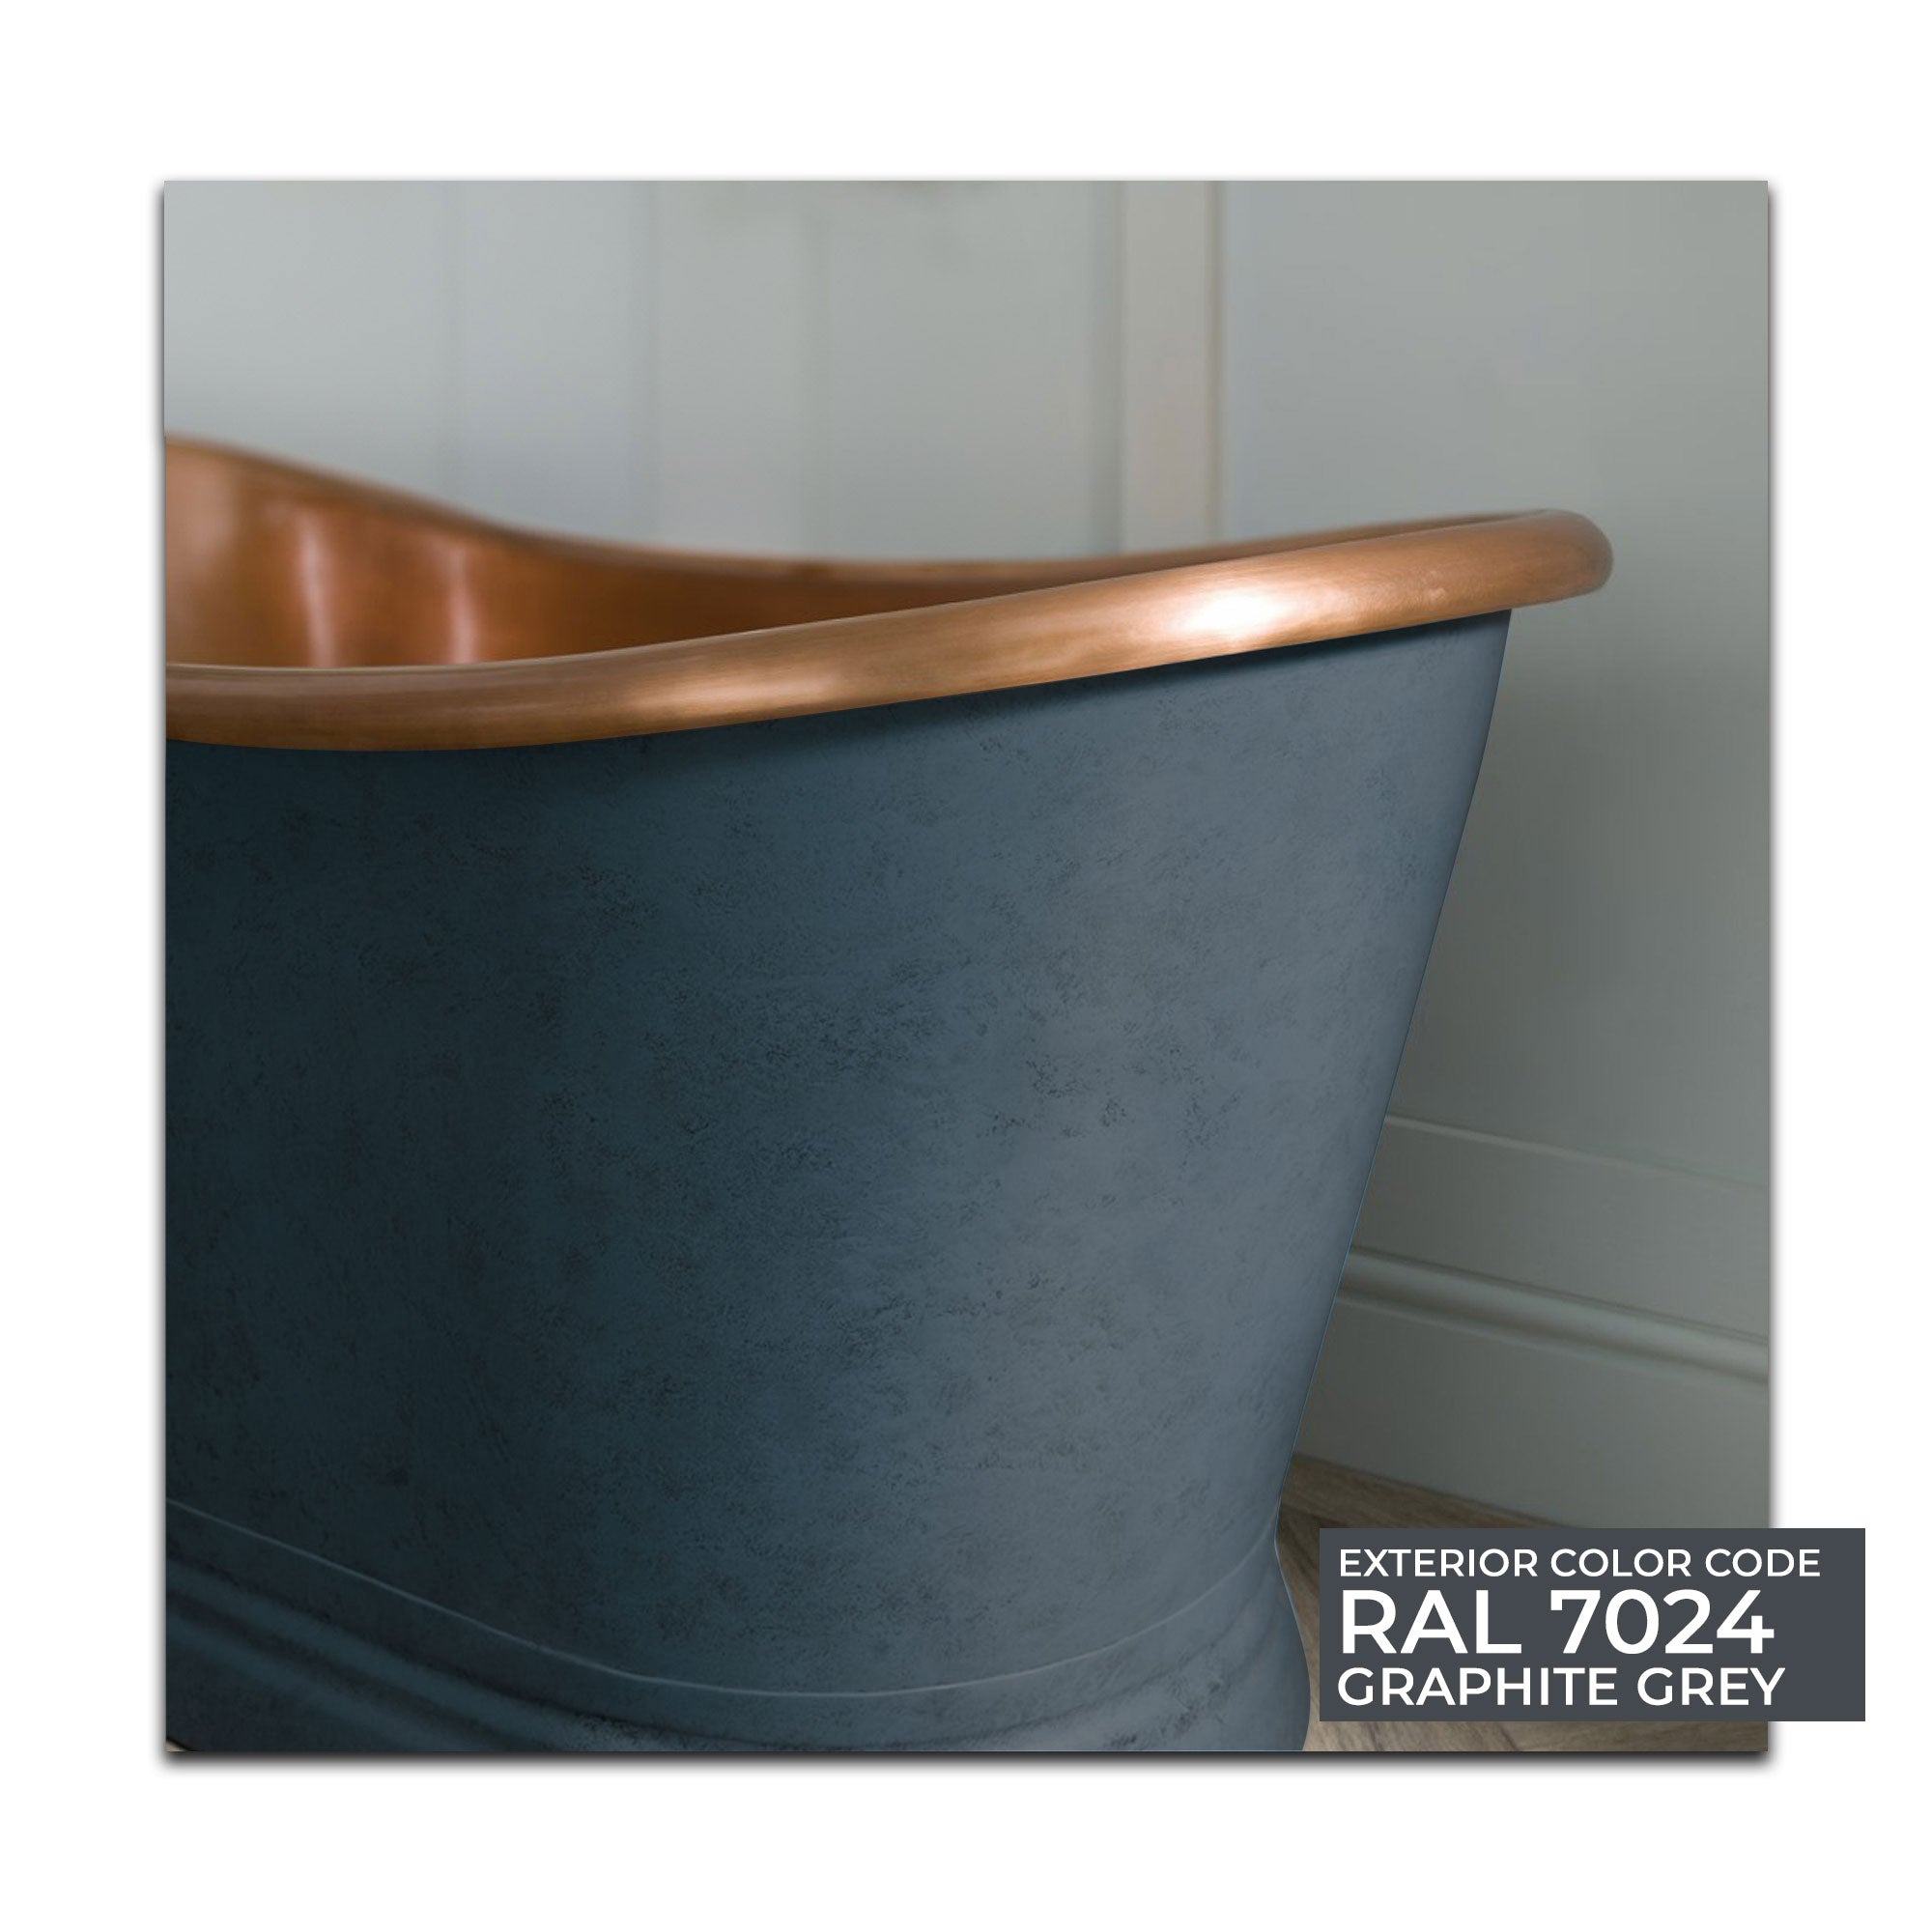 Coppersmith Slanted Cascading Base Copper Bathtub RAL 7024 Graphite grey Exterior & Antique Finish Interior